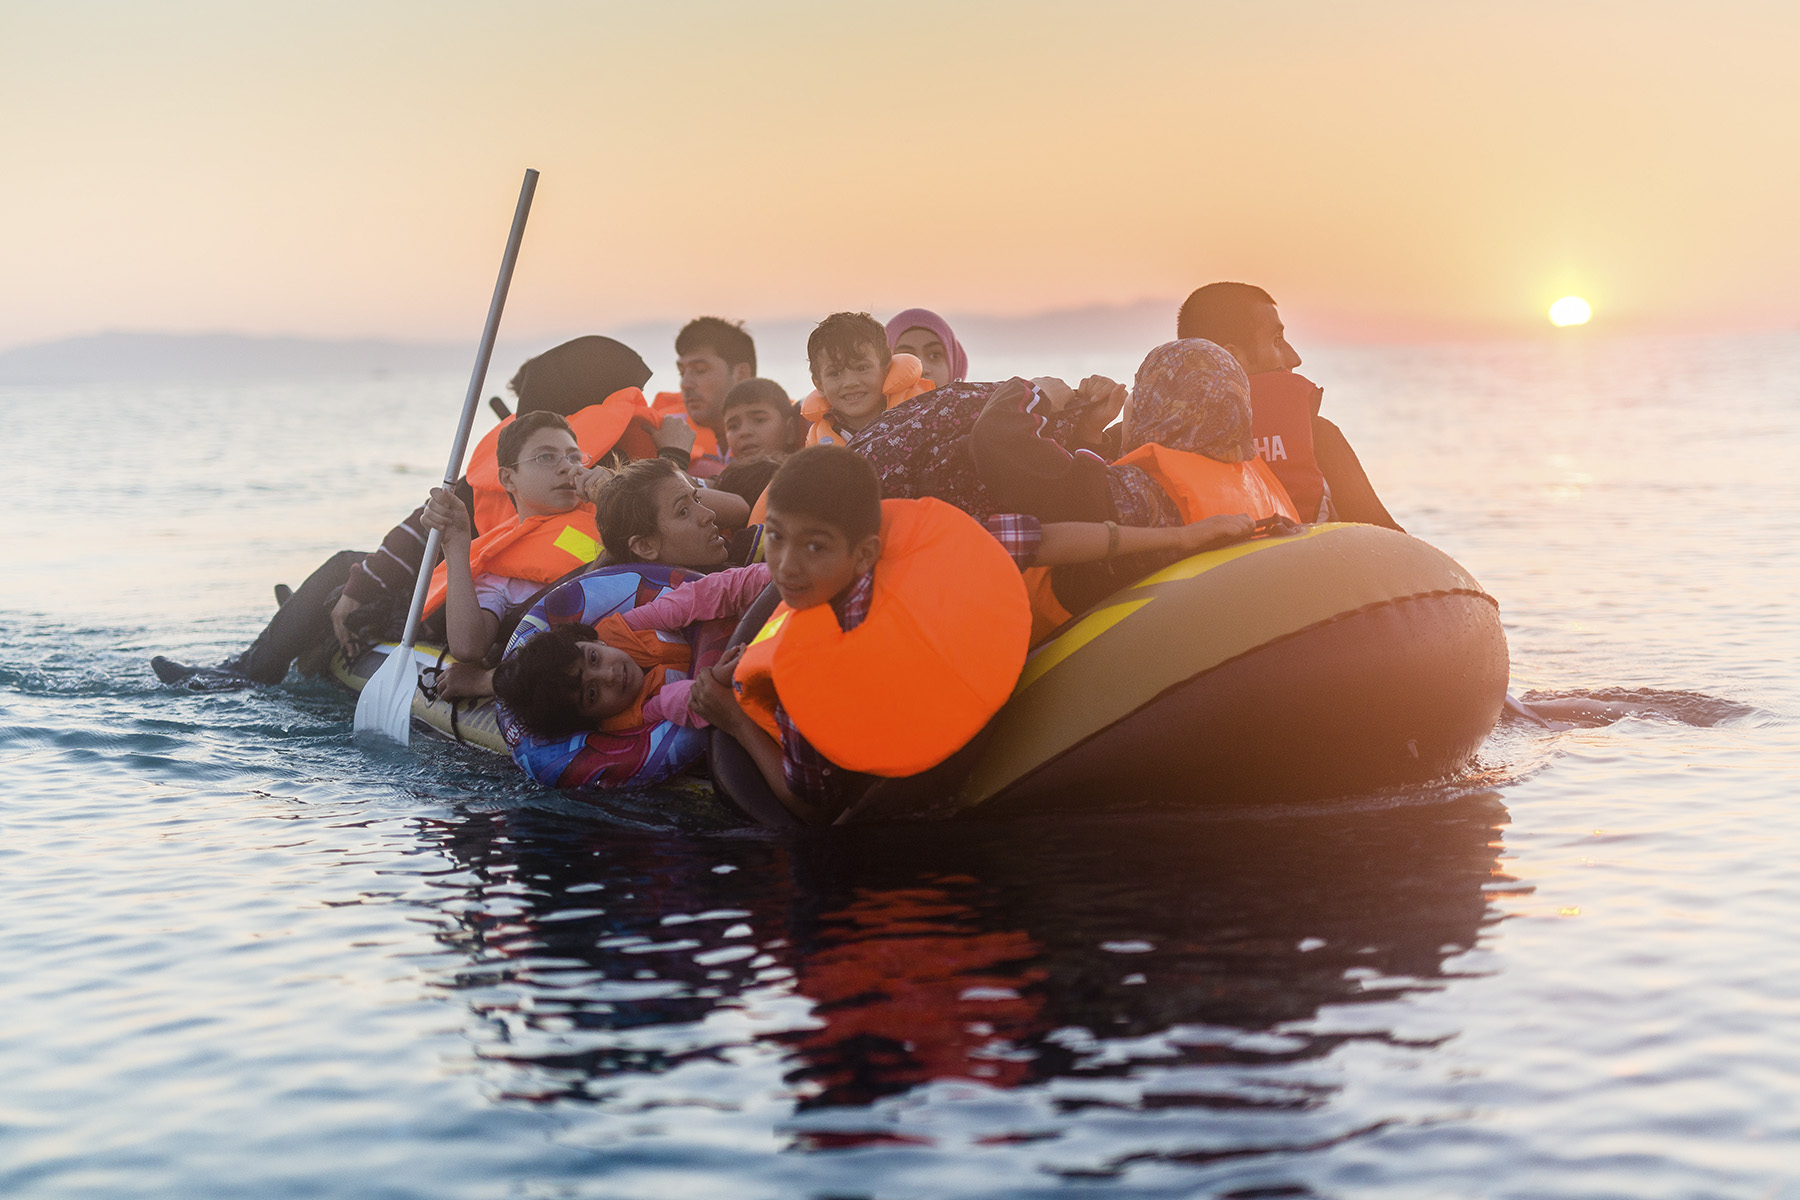 Refugees coming to Kos Island